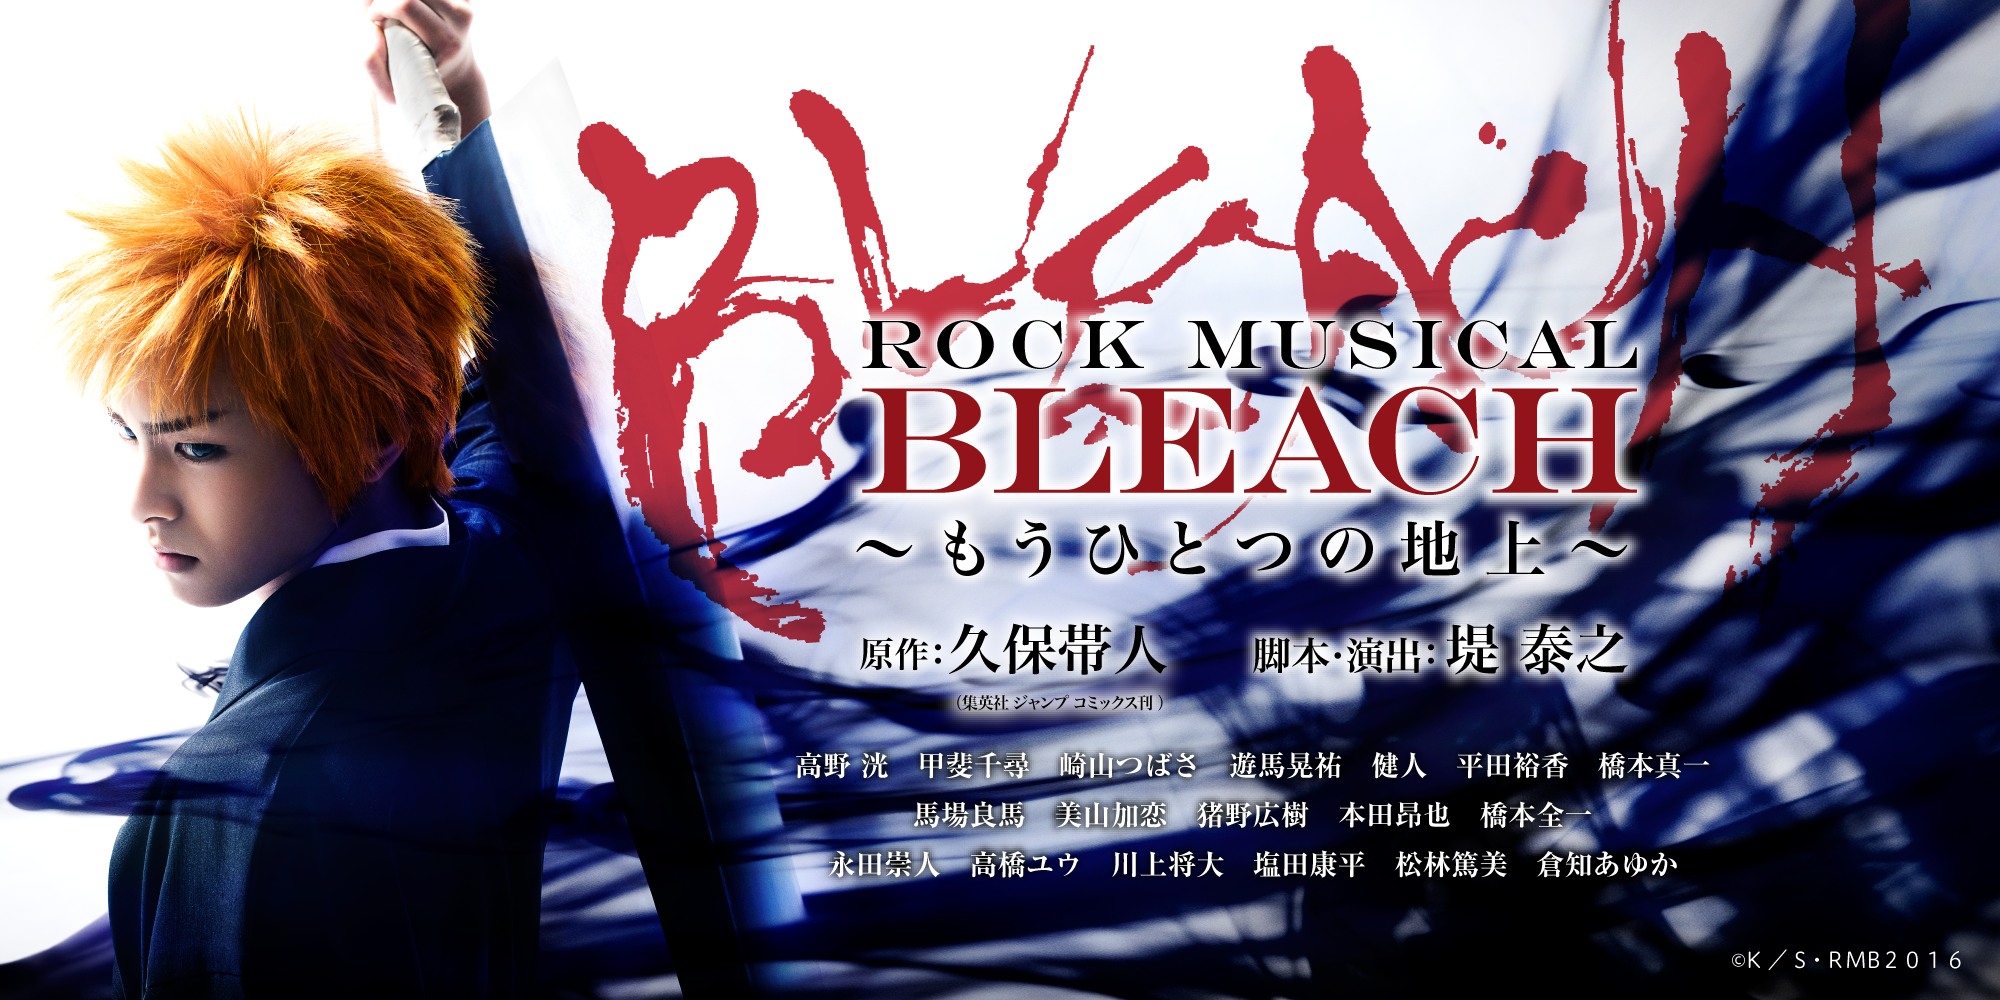 ROCK MUSICAL BLEACH もうひとつの地上 blu-ray boxCDDVD